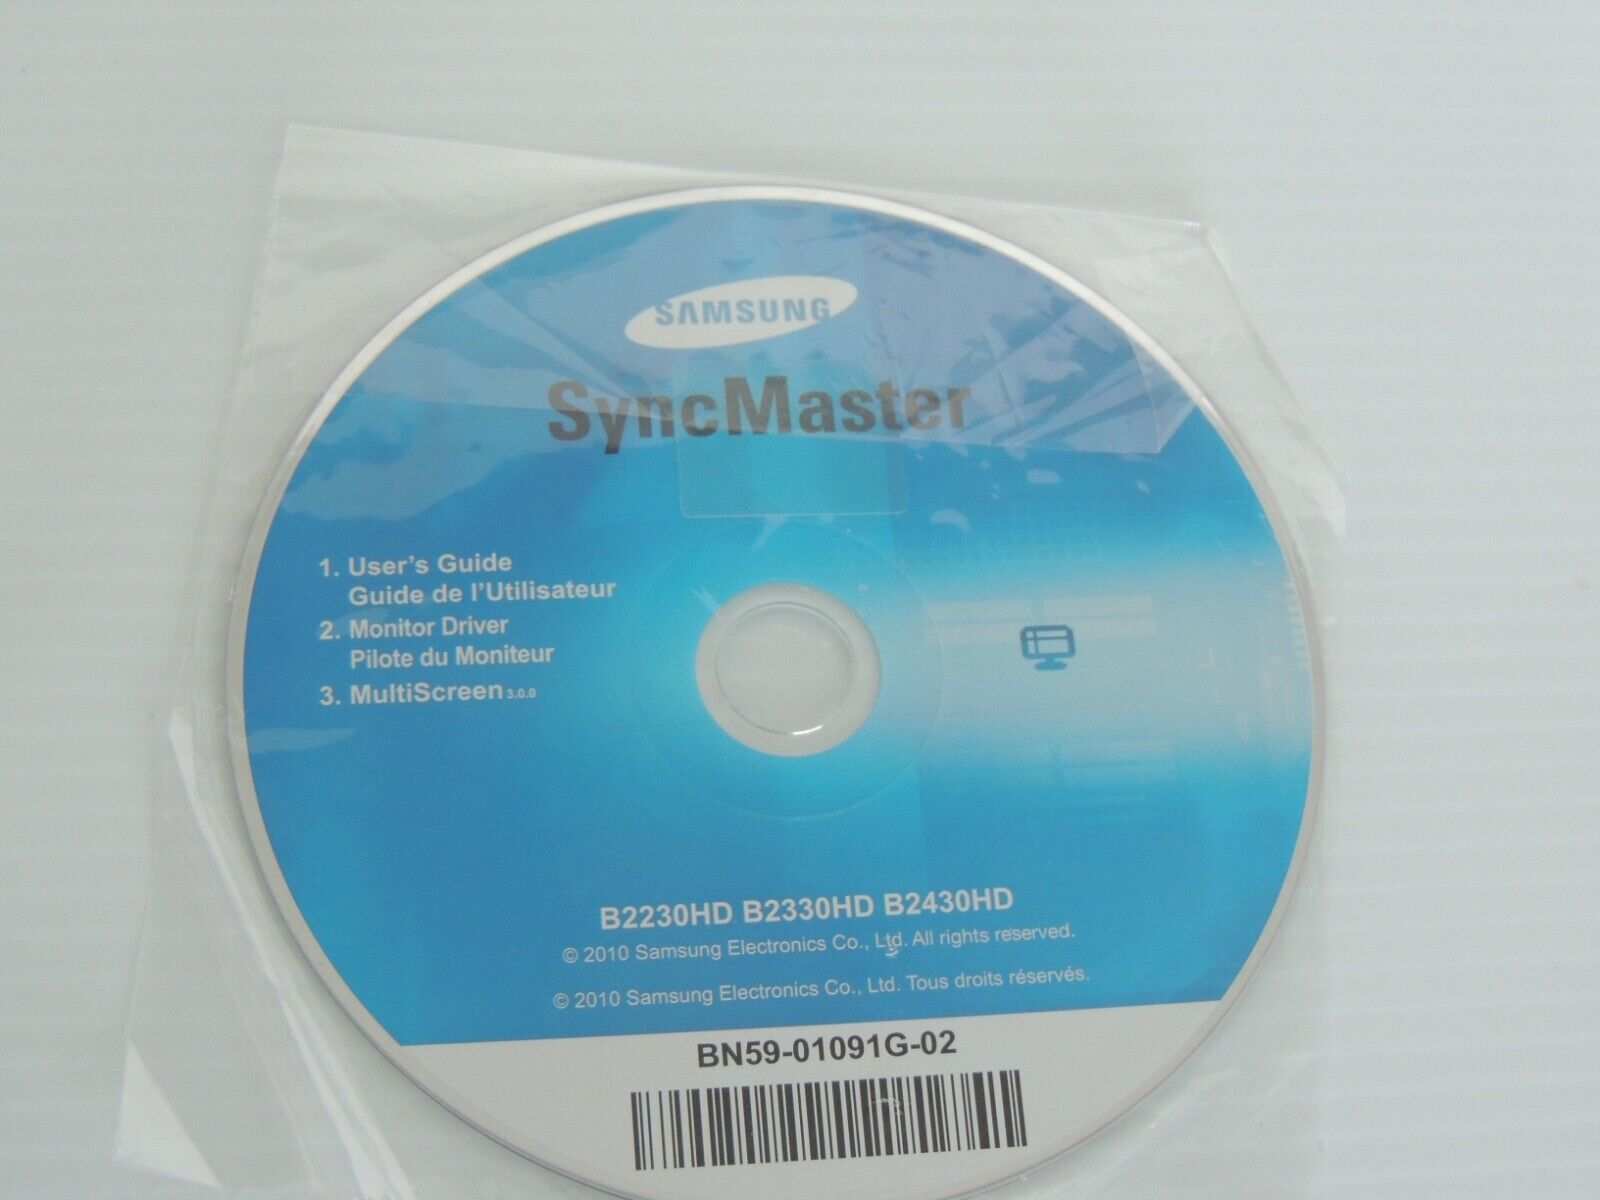 Samsung SyncMaster B2230HD B2330HD B2430HD Driver CD only